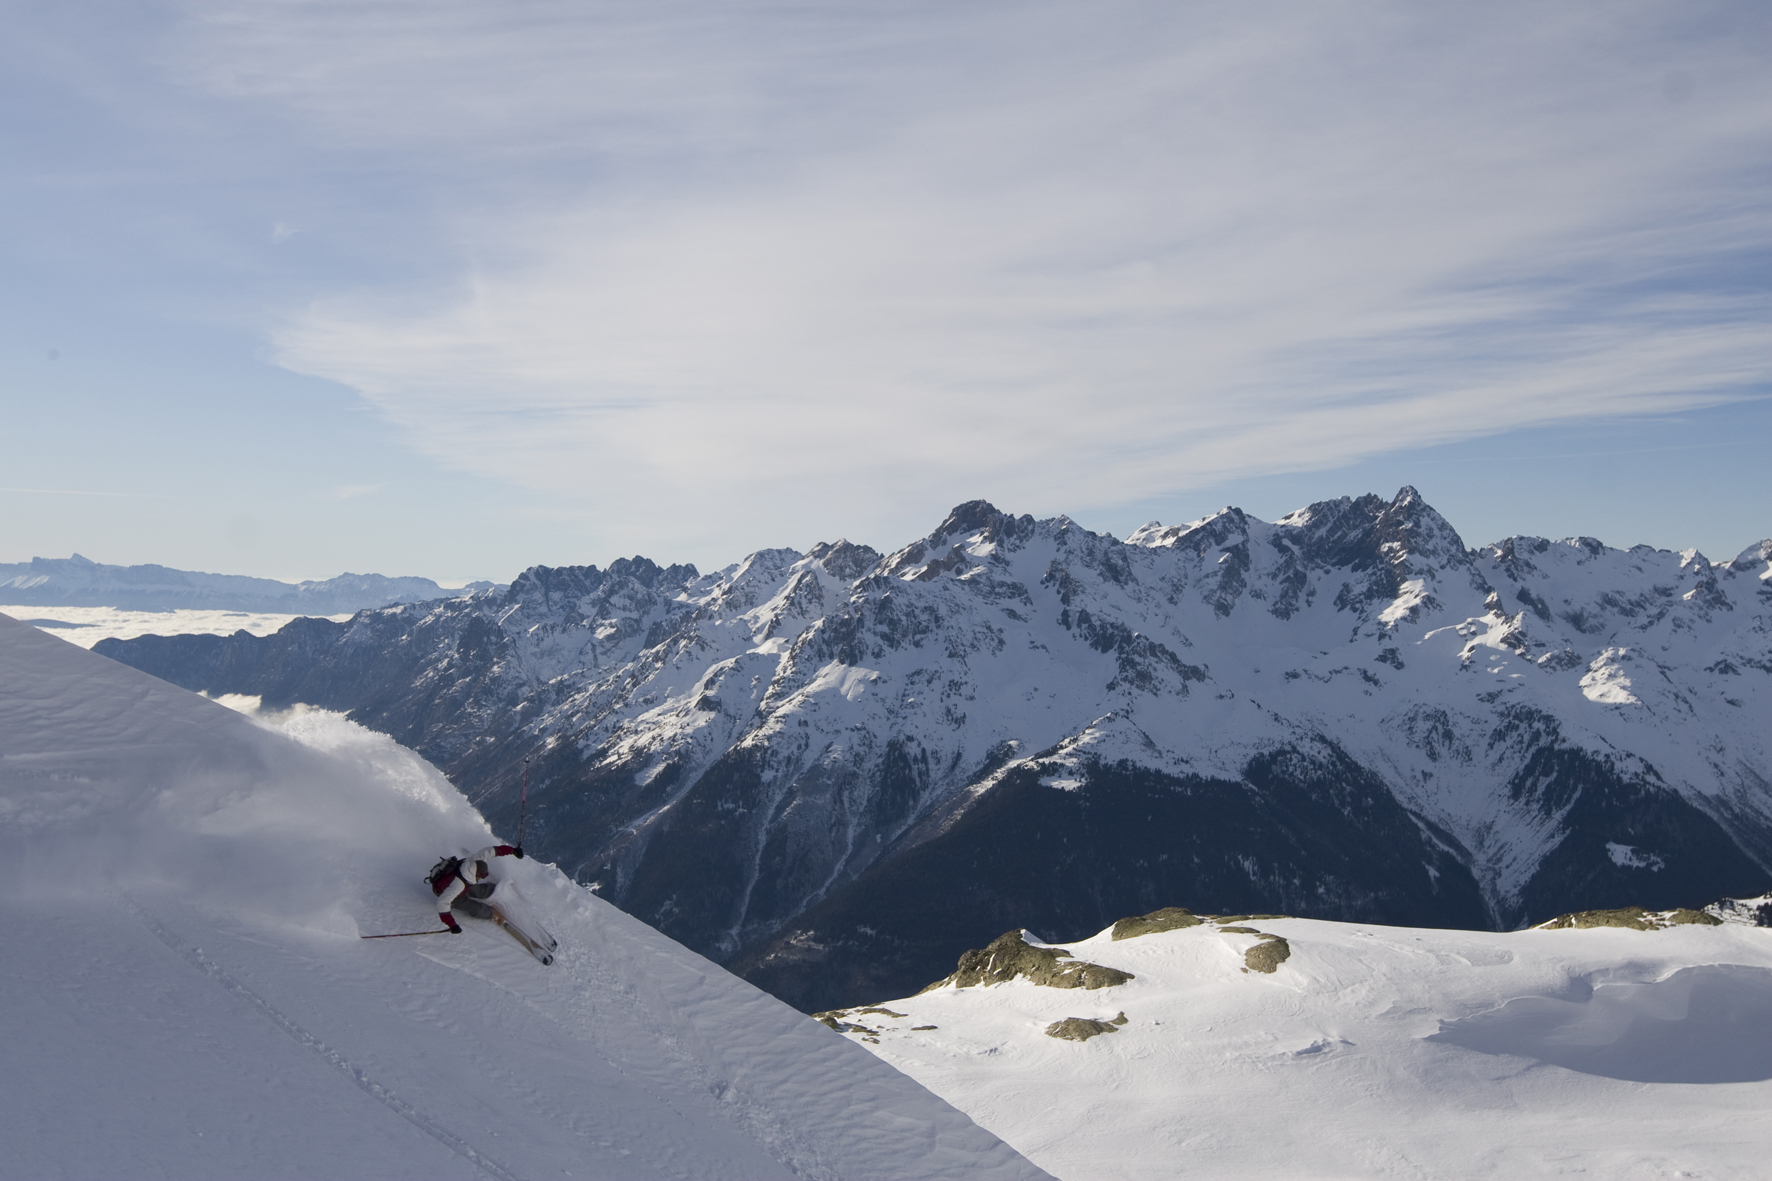 Skiing on the edge